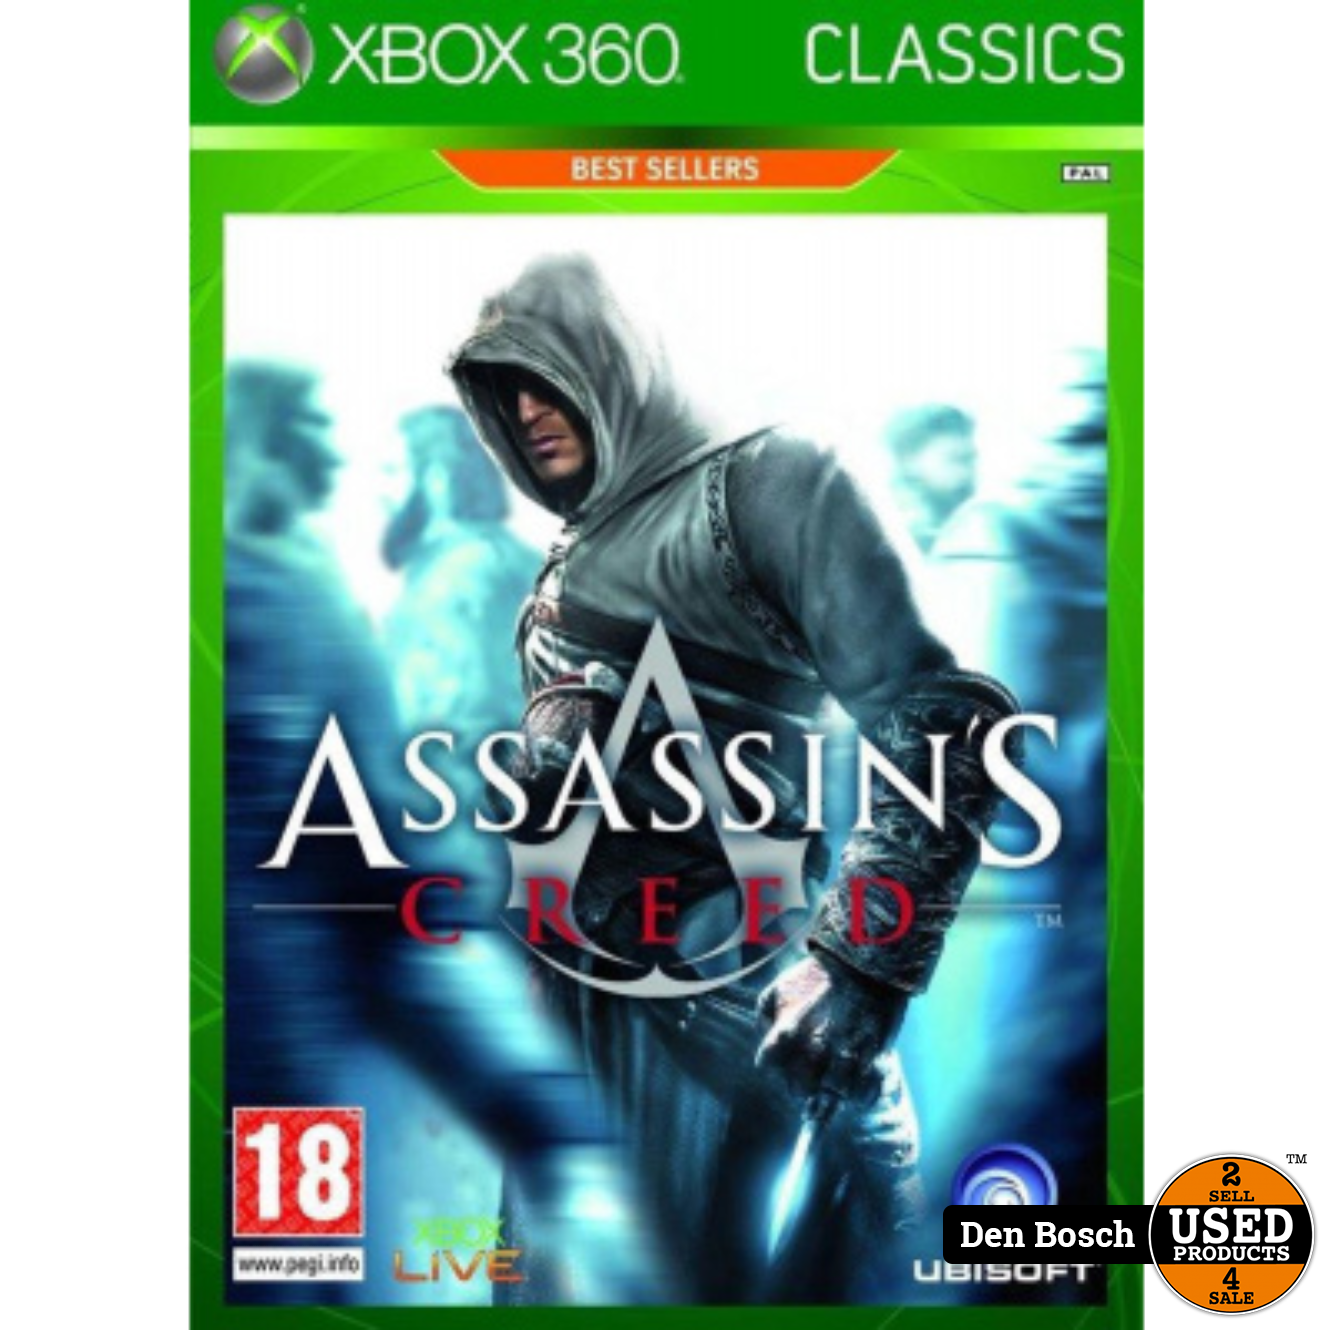 Weggelaten Bisschop Prediken Assassin's Creed Classics - Xbox 360 Game - Used Products Den Bosch